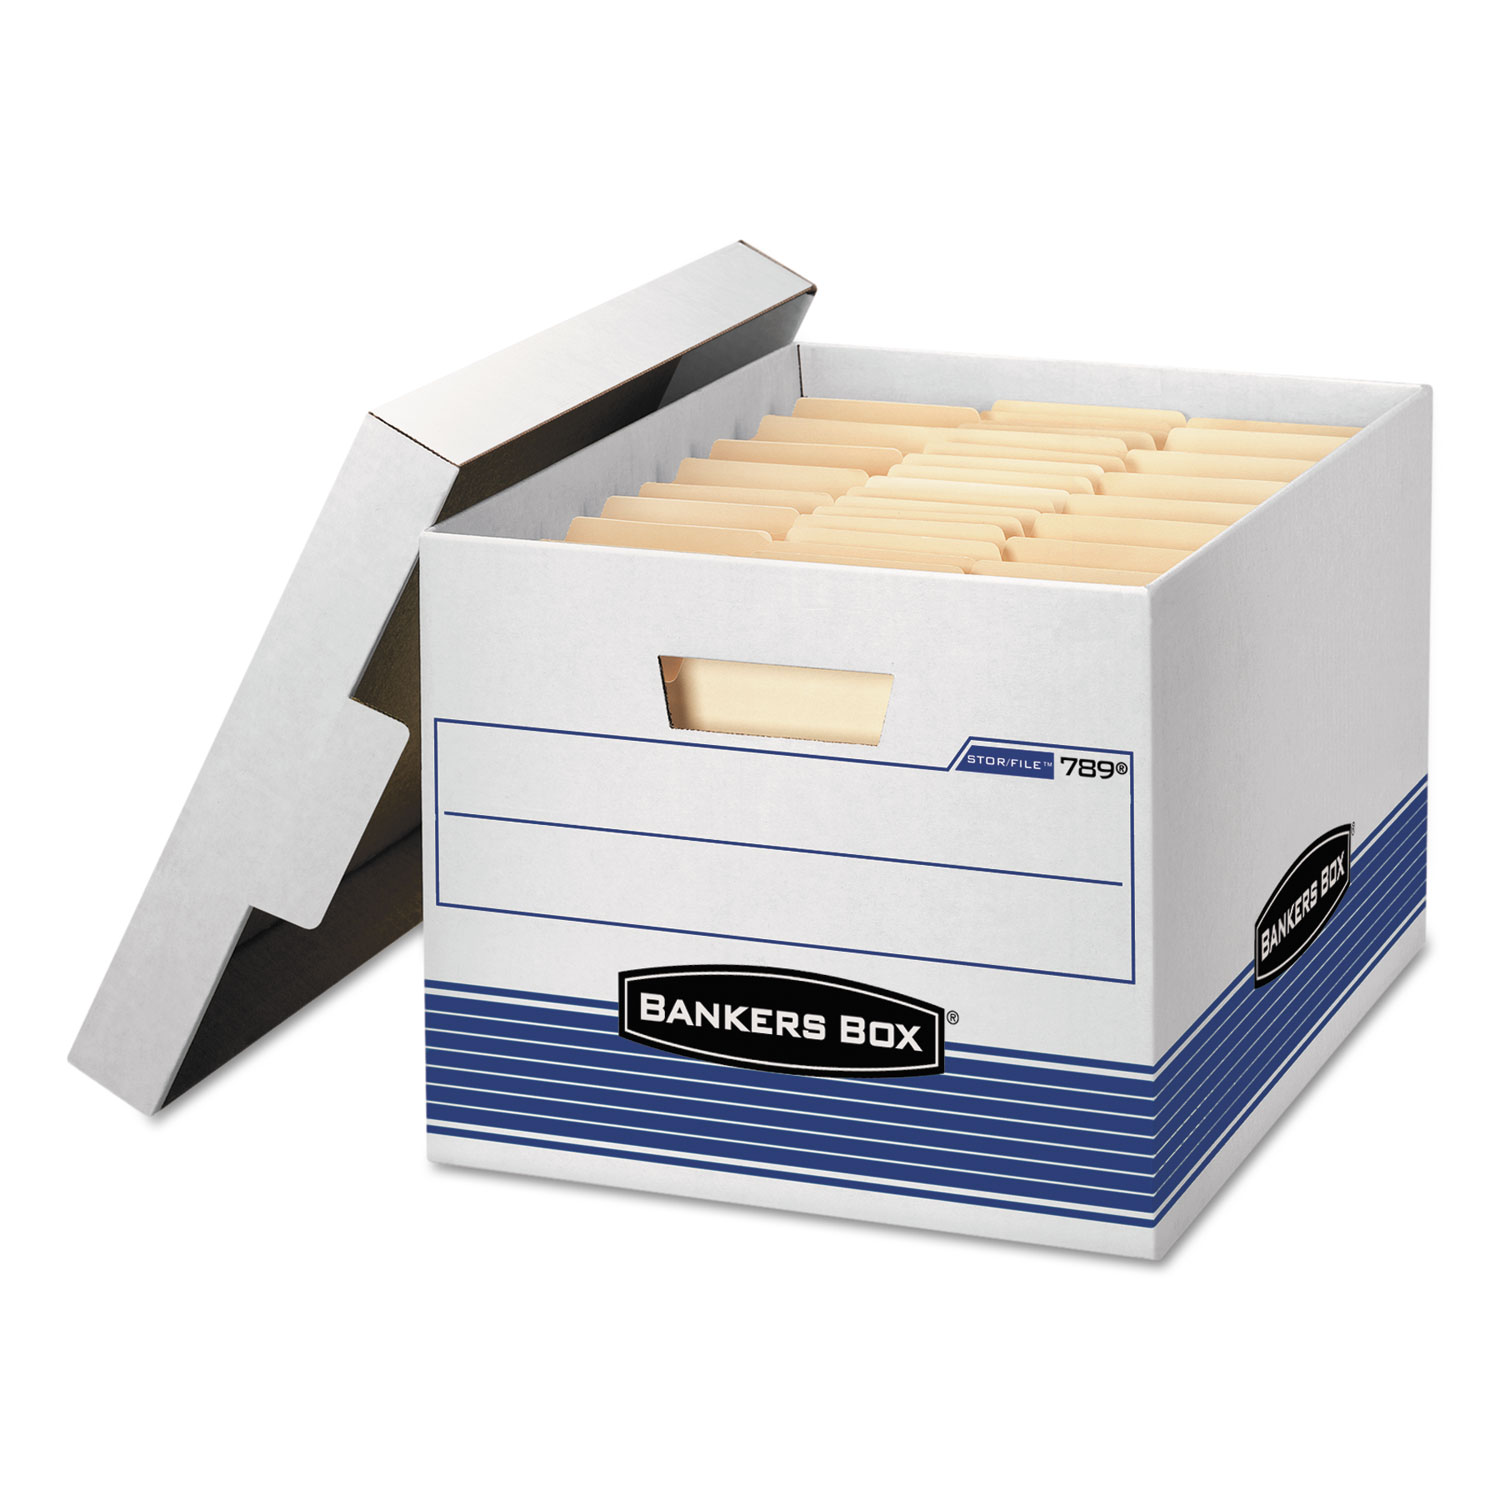  Bankers Box 0078907 STOR/FILE Medium-Duty Letter/Legal Storage Boxes, Letter/Legal Files, 12.75 x 16.5 x 10.5, White/Blue, 4/Carton (FEL0078907) 